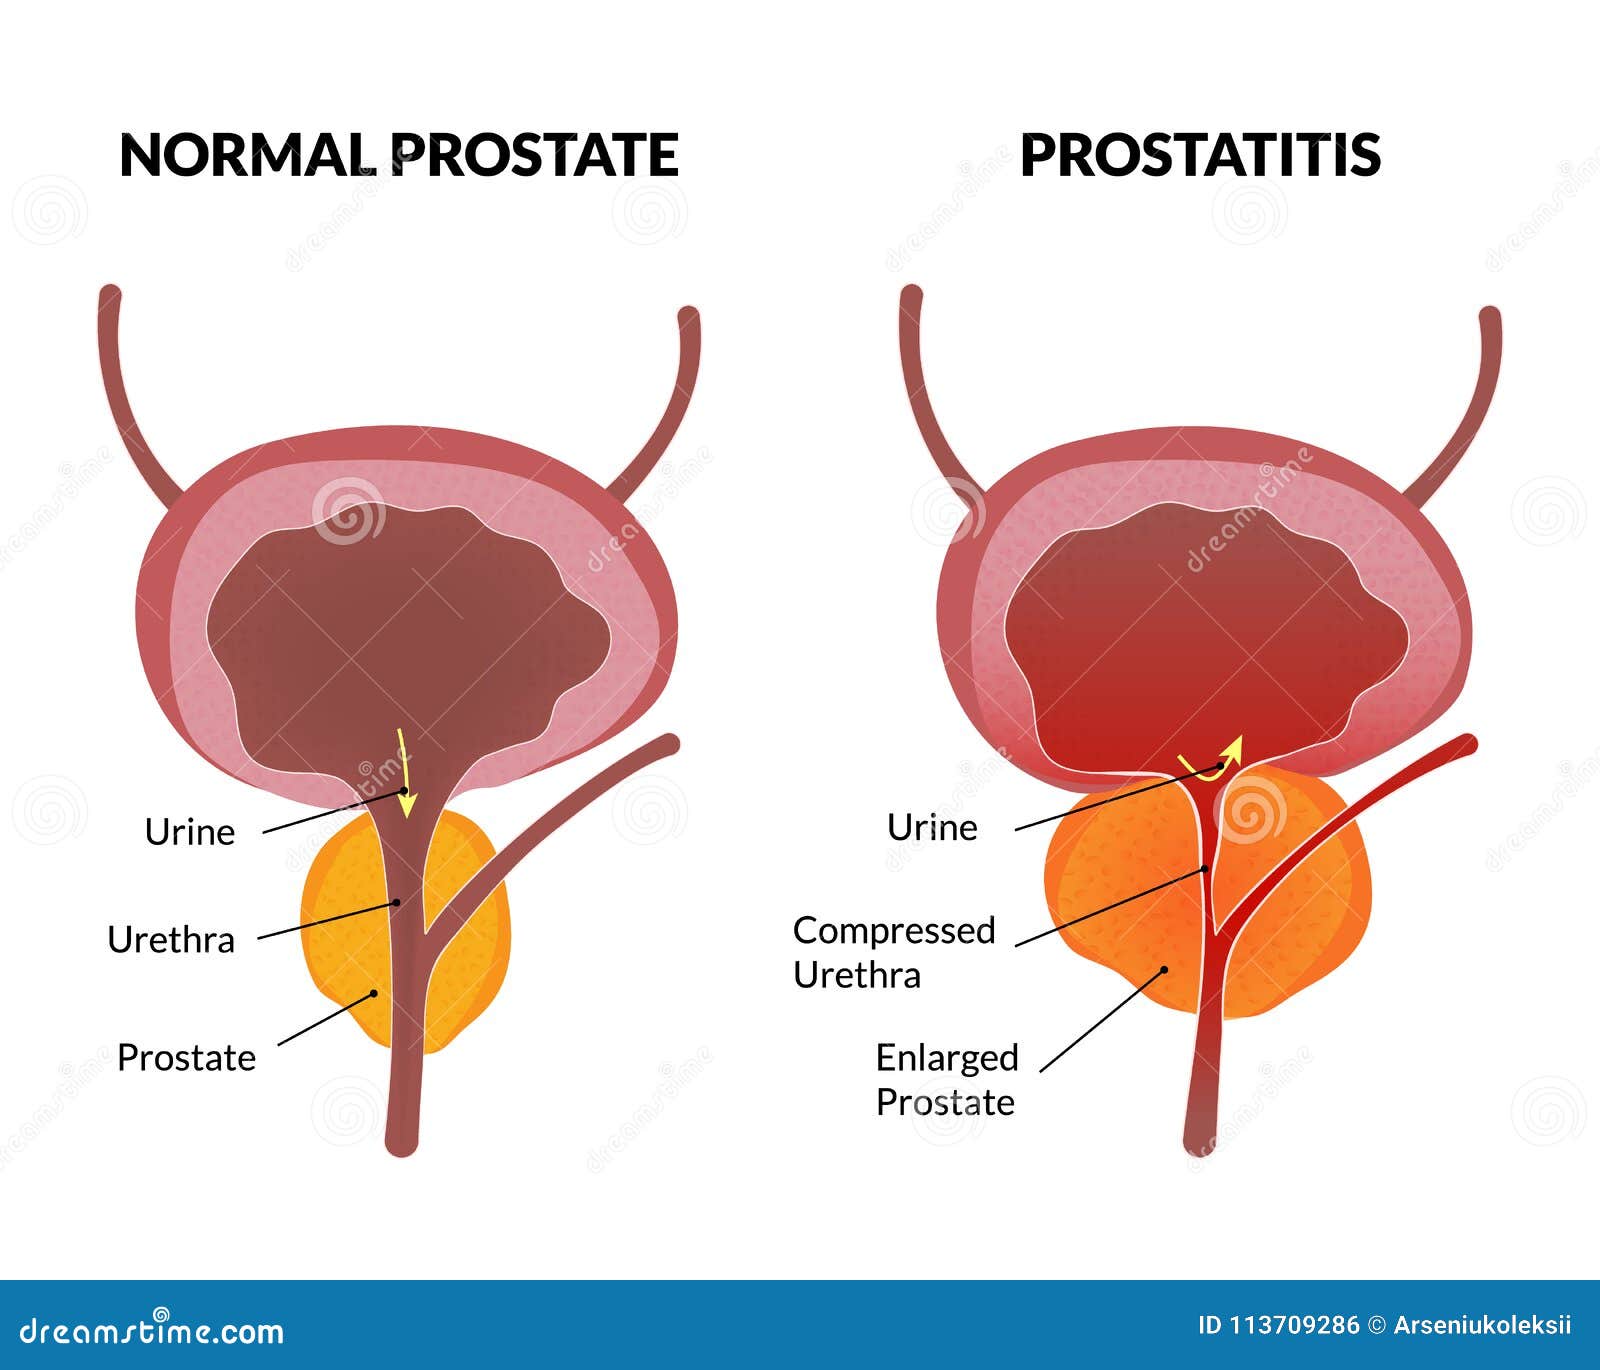 acute prostatitis and prostate cancer